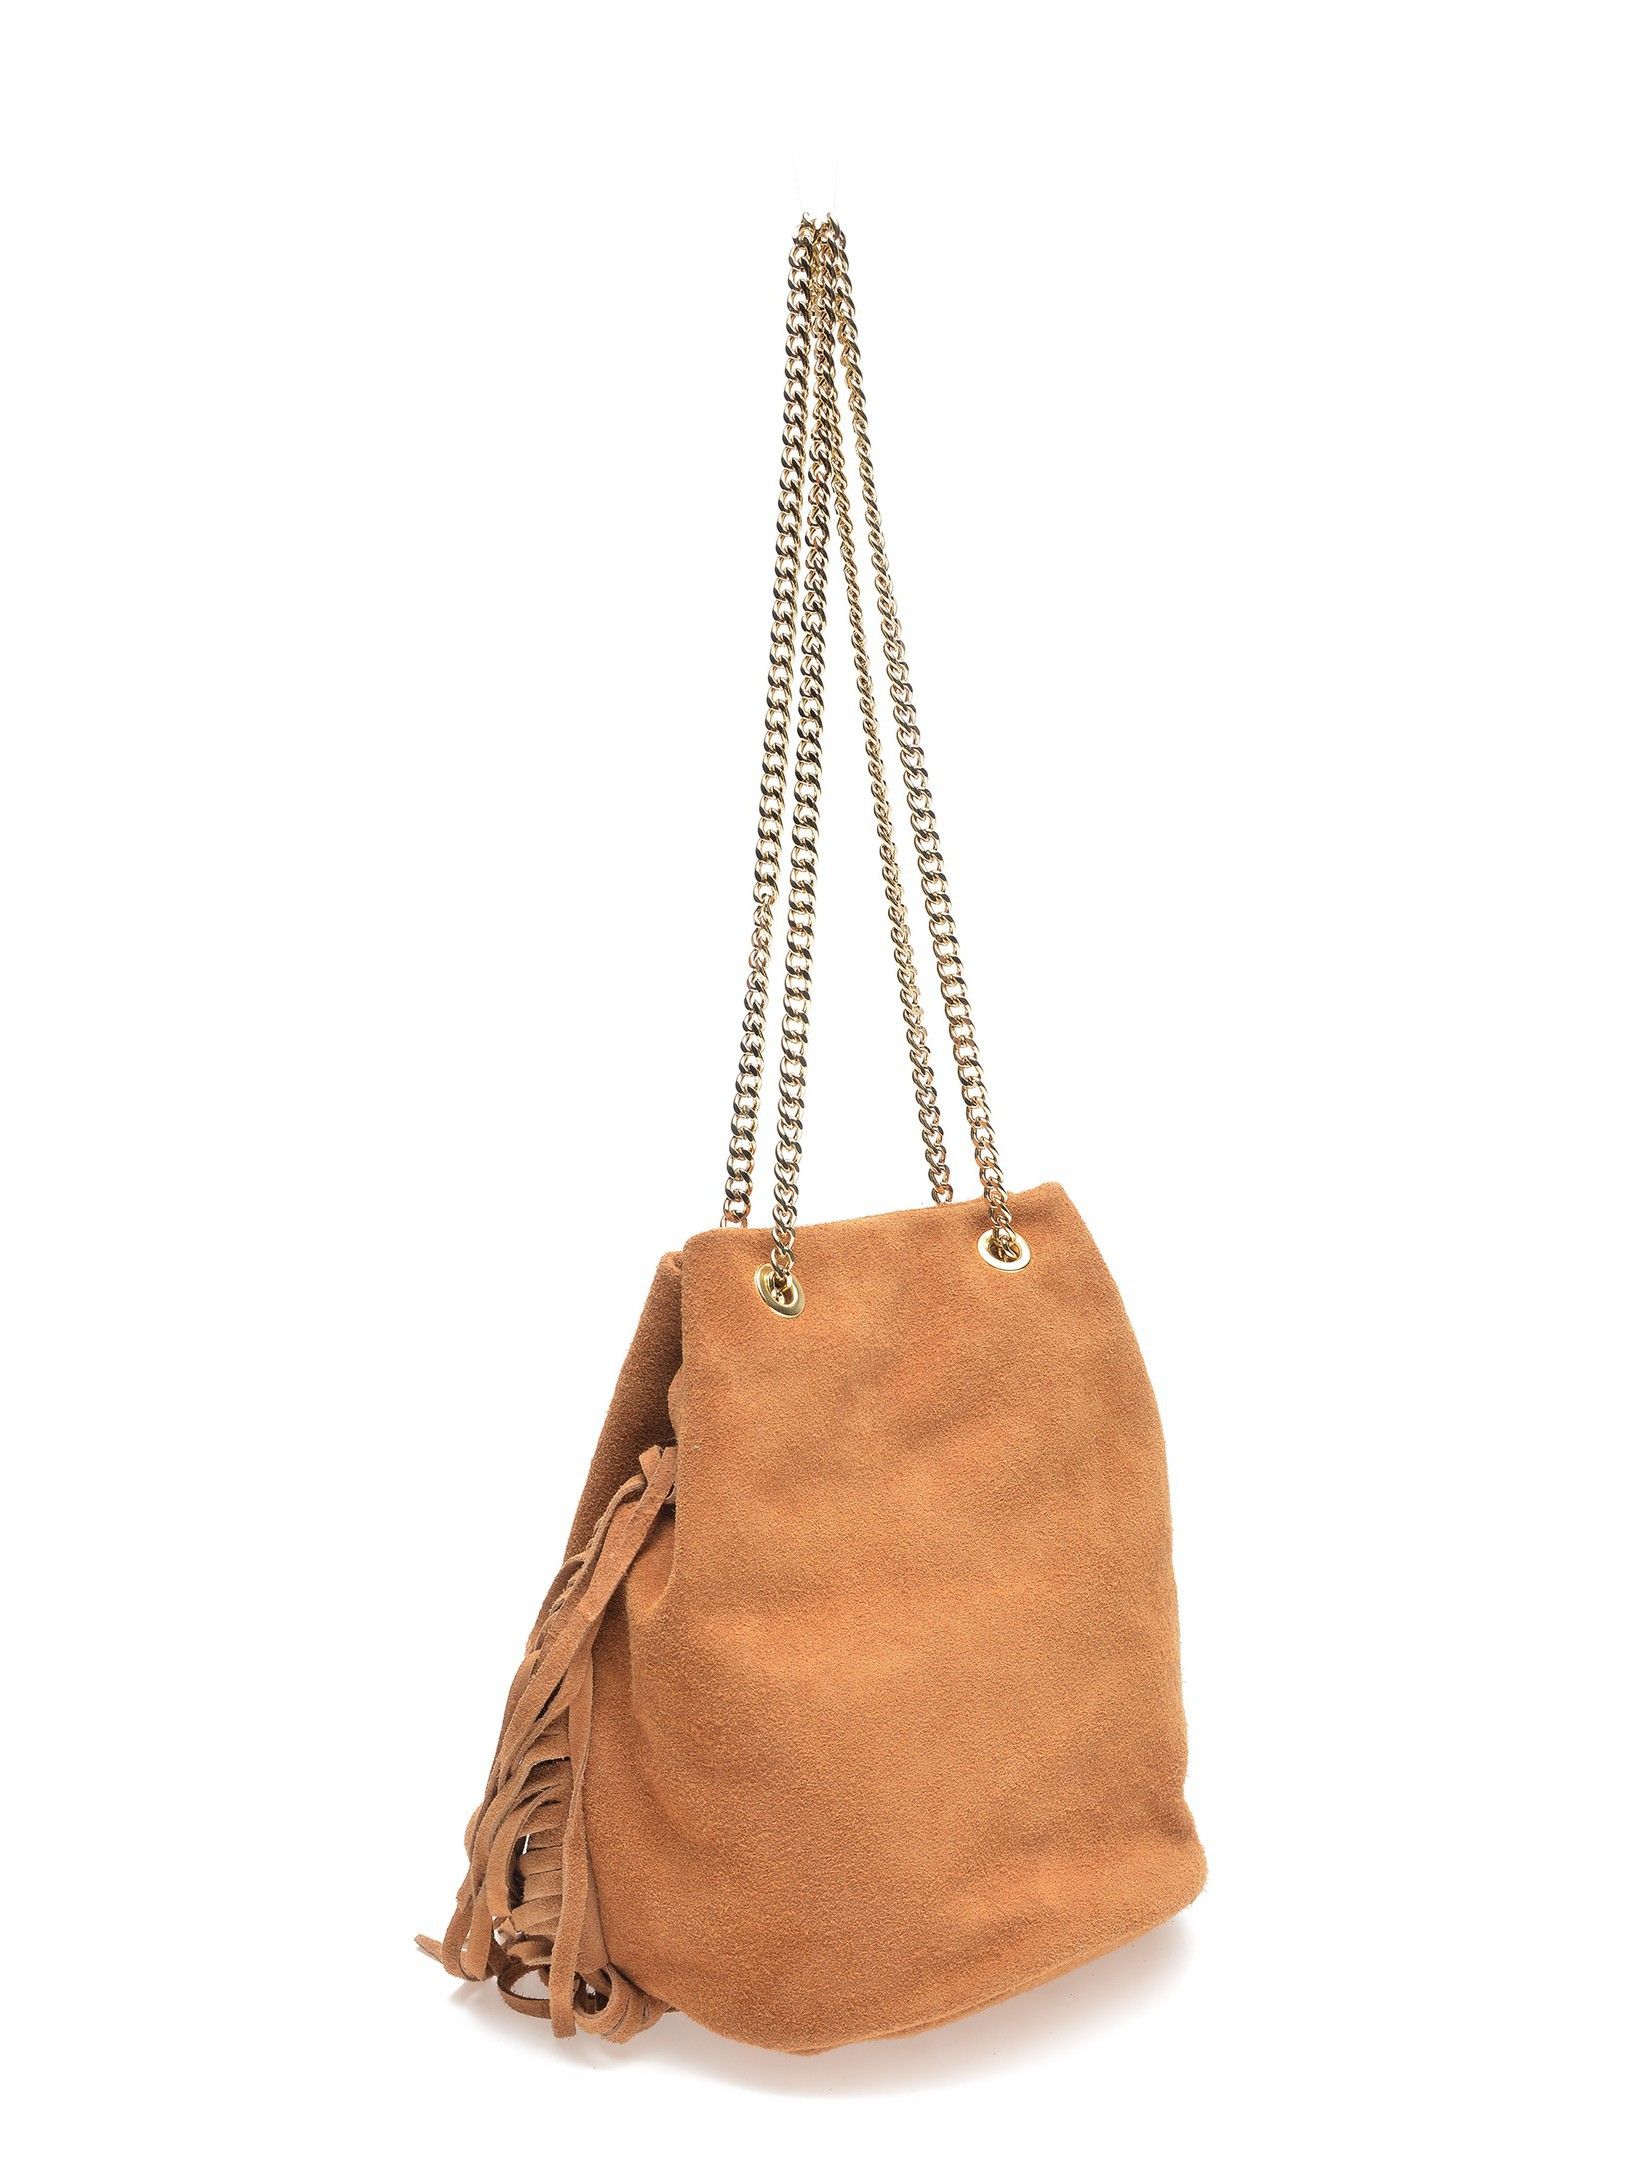 Shoulder bag
100% suede
Magnetic closure
Inner zip pocket
Chain handle
Stud decoration
Dimensions (L): 24x27x19 cm
Handle: /
Shoulder strap: 120 cm adjustable